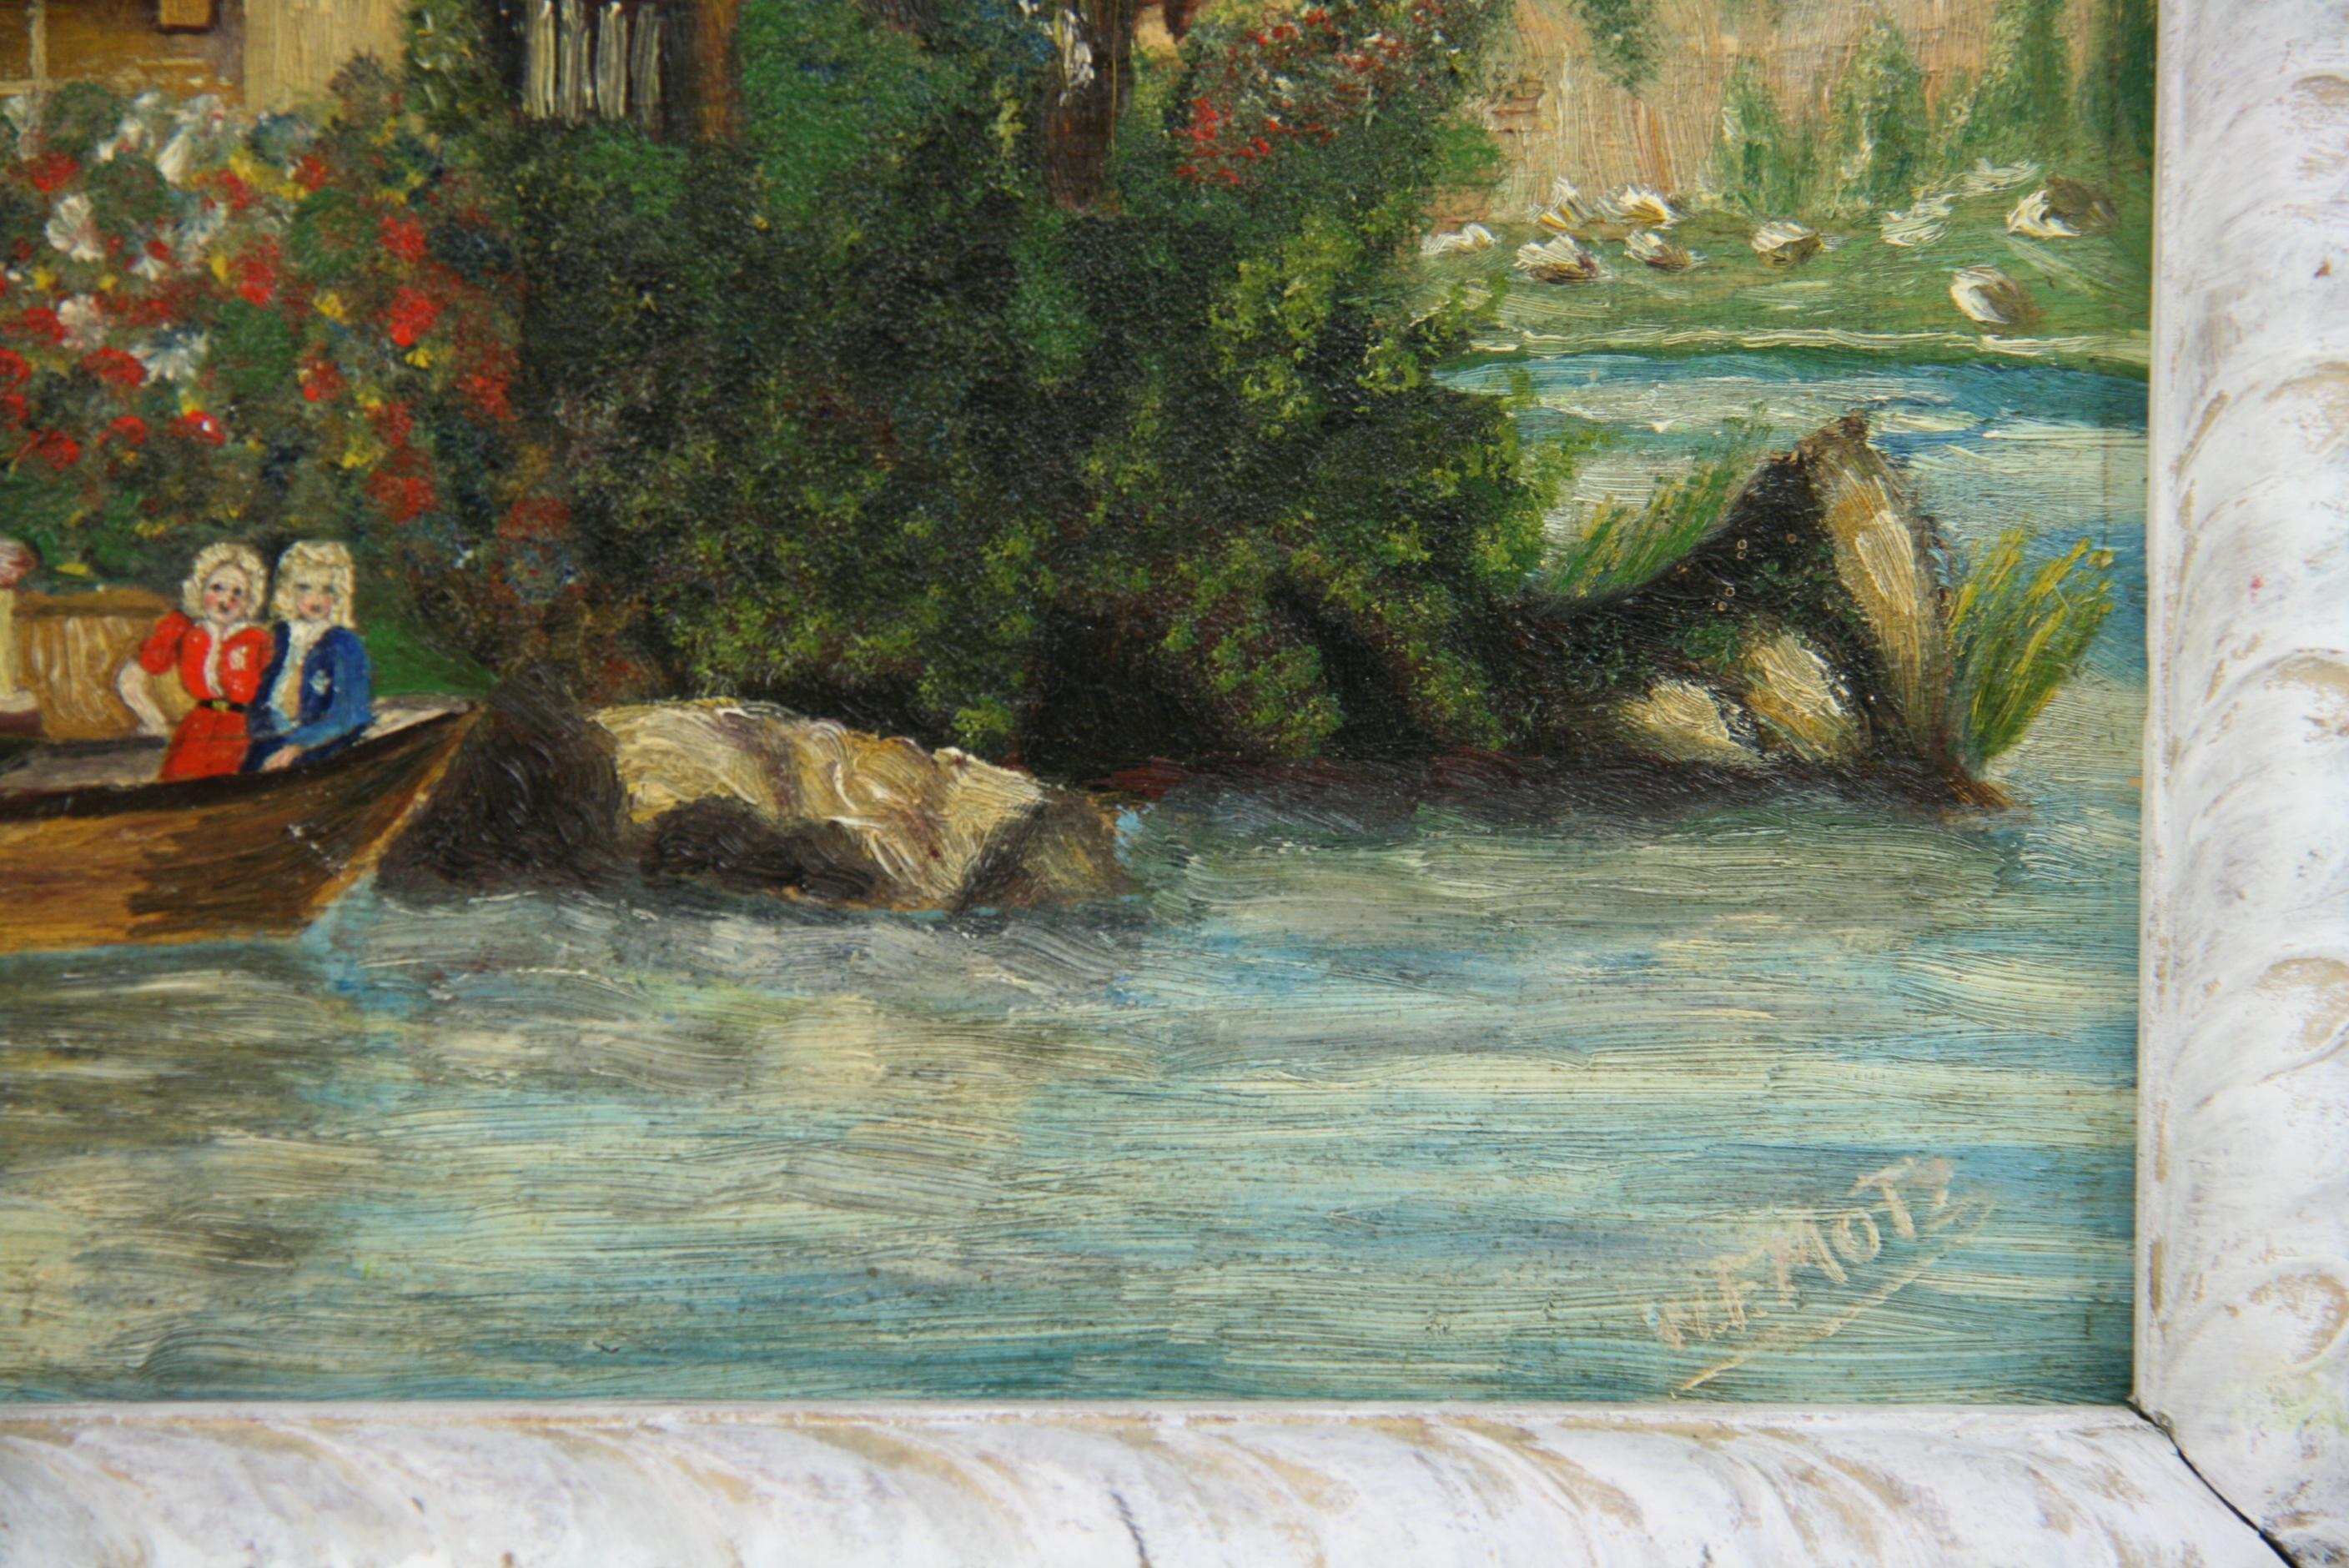 5-3499a Oil on wood panel landscape of an Lake Como villa
Set in an ornate wood frame